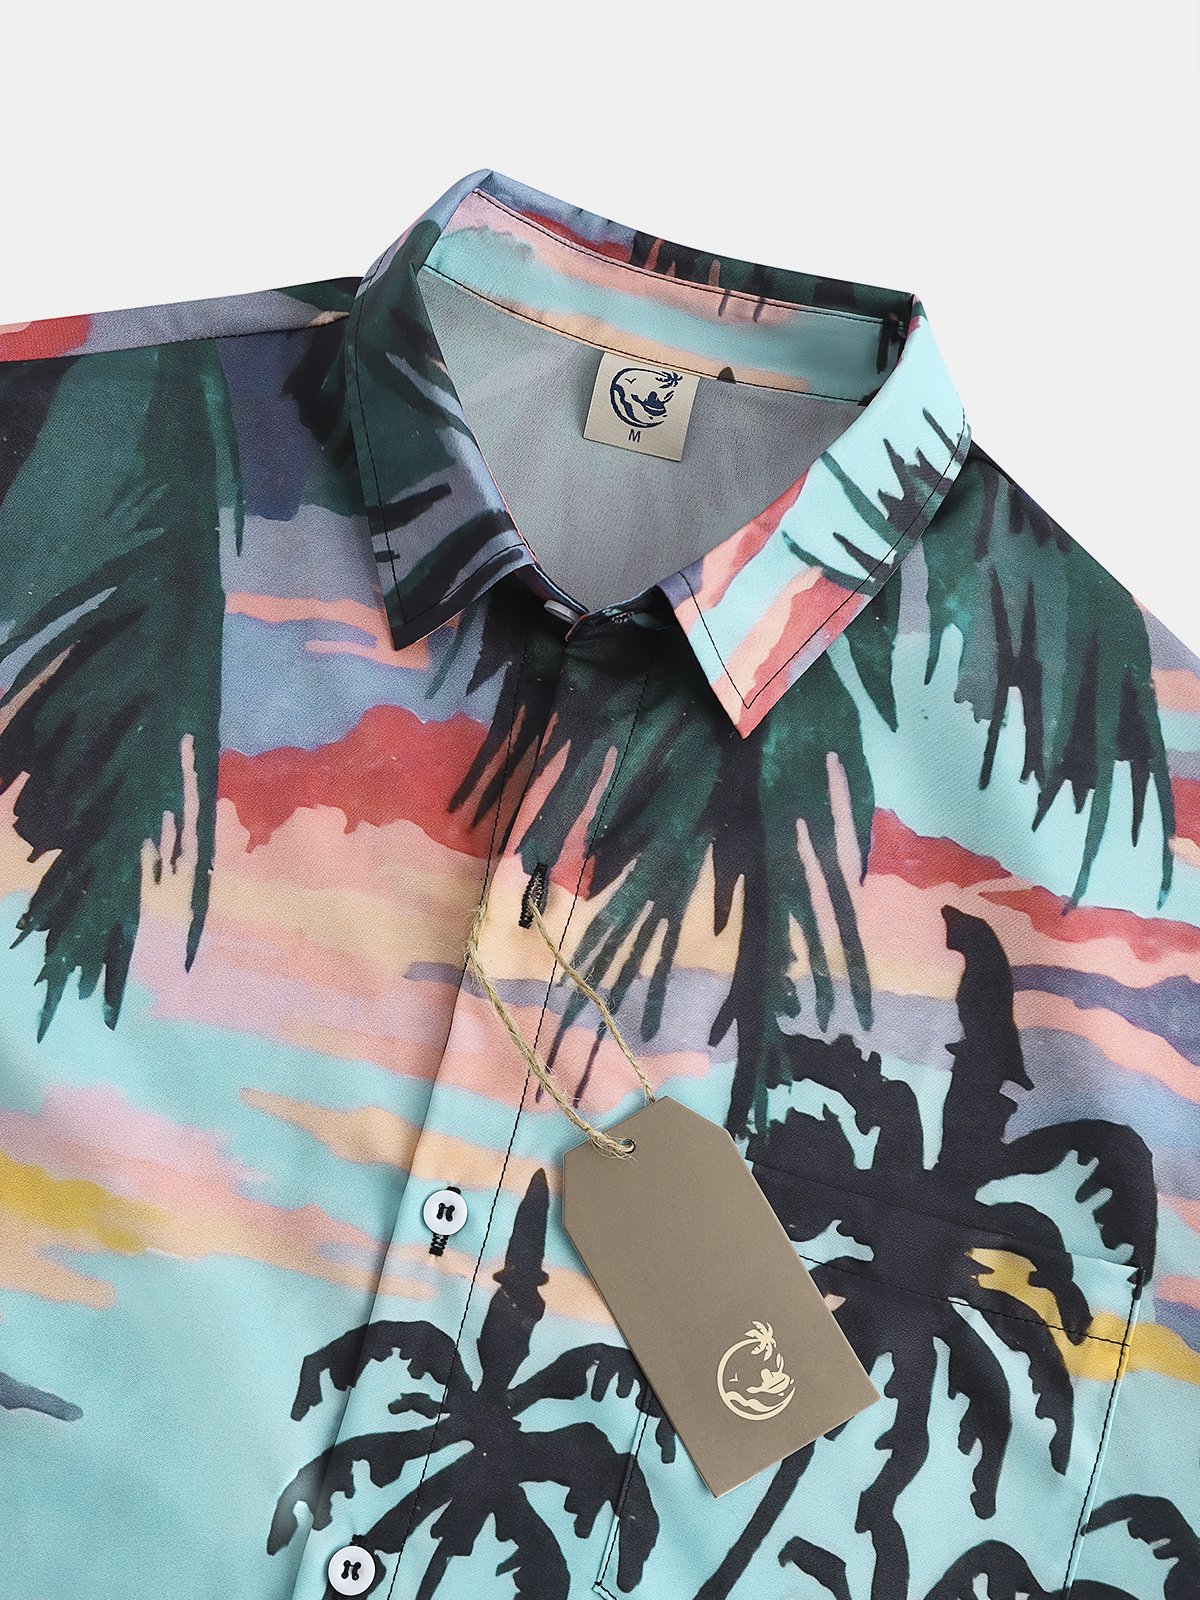 Men's Coconut Print Short Sleeve Hawaiian Shirt with Breast Pocket